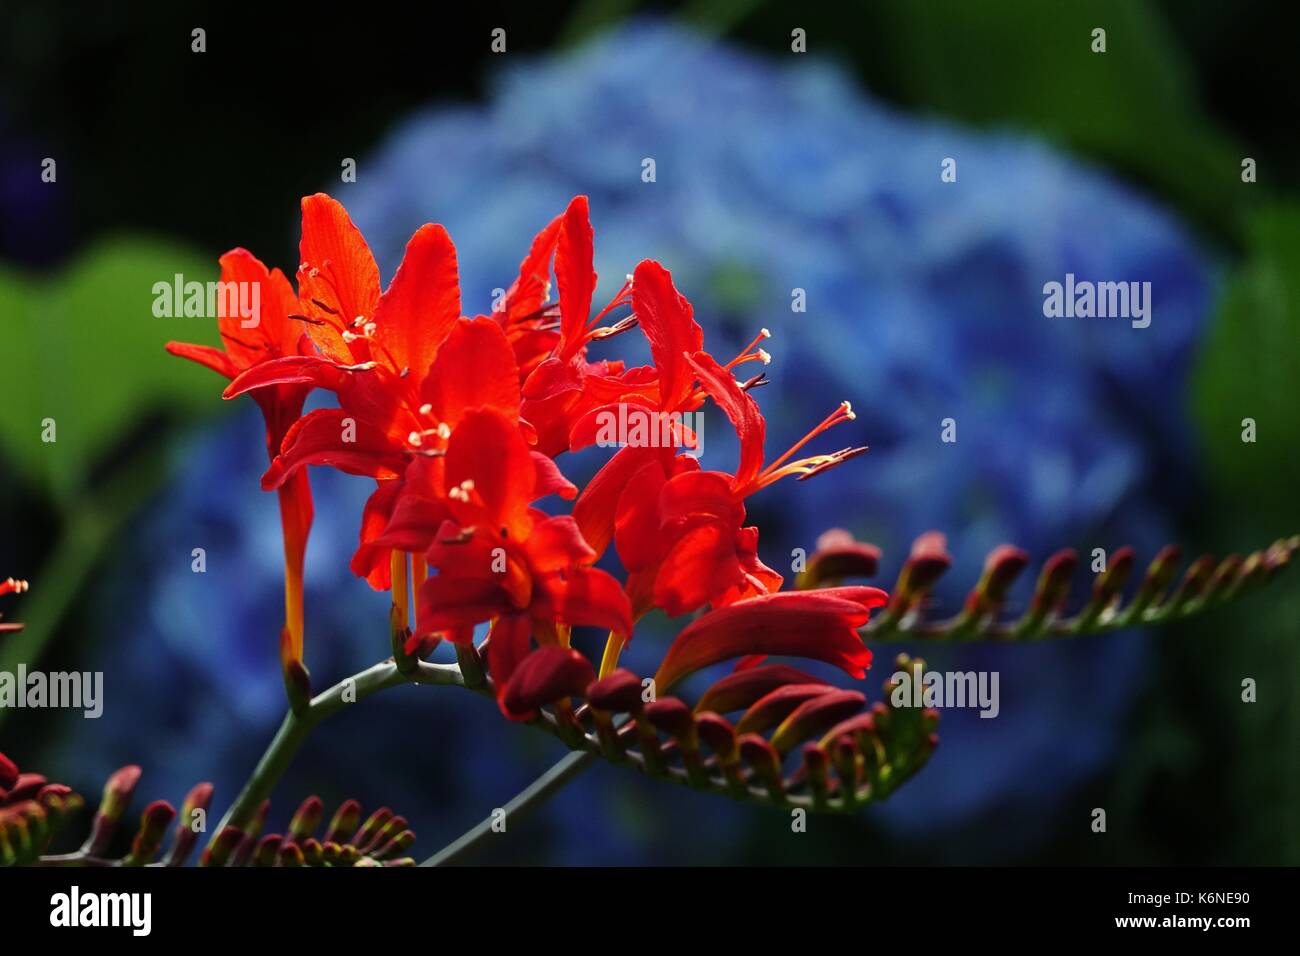 Crocosmia flower blooming Stock Photo